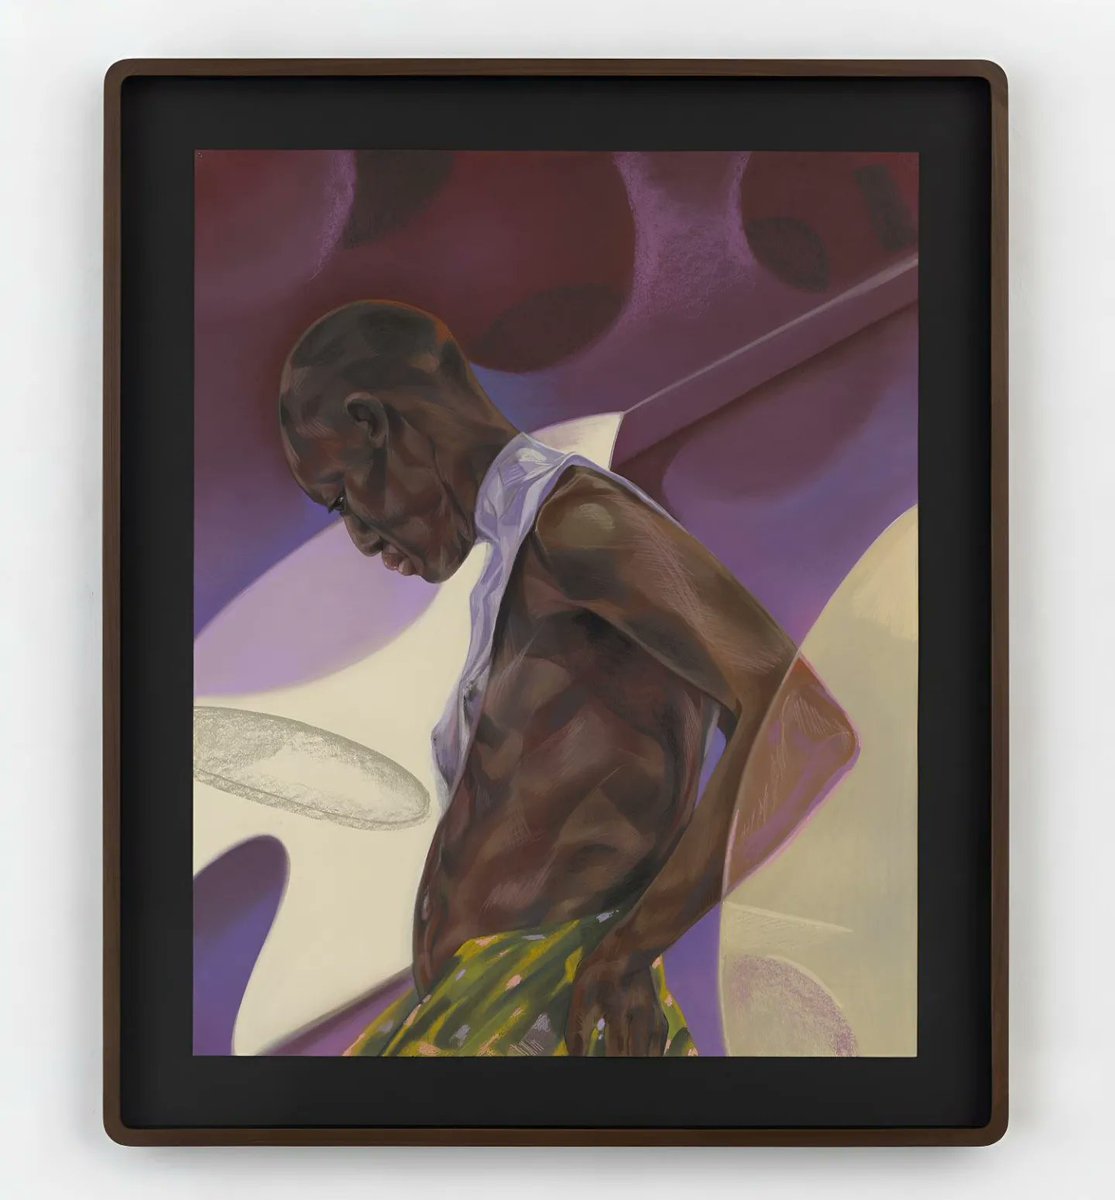 ART INDEX AFRICA'S ART OF THE WEEK 

Title: Gathering citations 
Artist: Tolani ojih odutola 
Medium: Pastel and Charcoal on paper 
Year:  2023 

#africanart  #artlovers #contemporaryart #TuesdayFeeling #tuesdayvibe